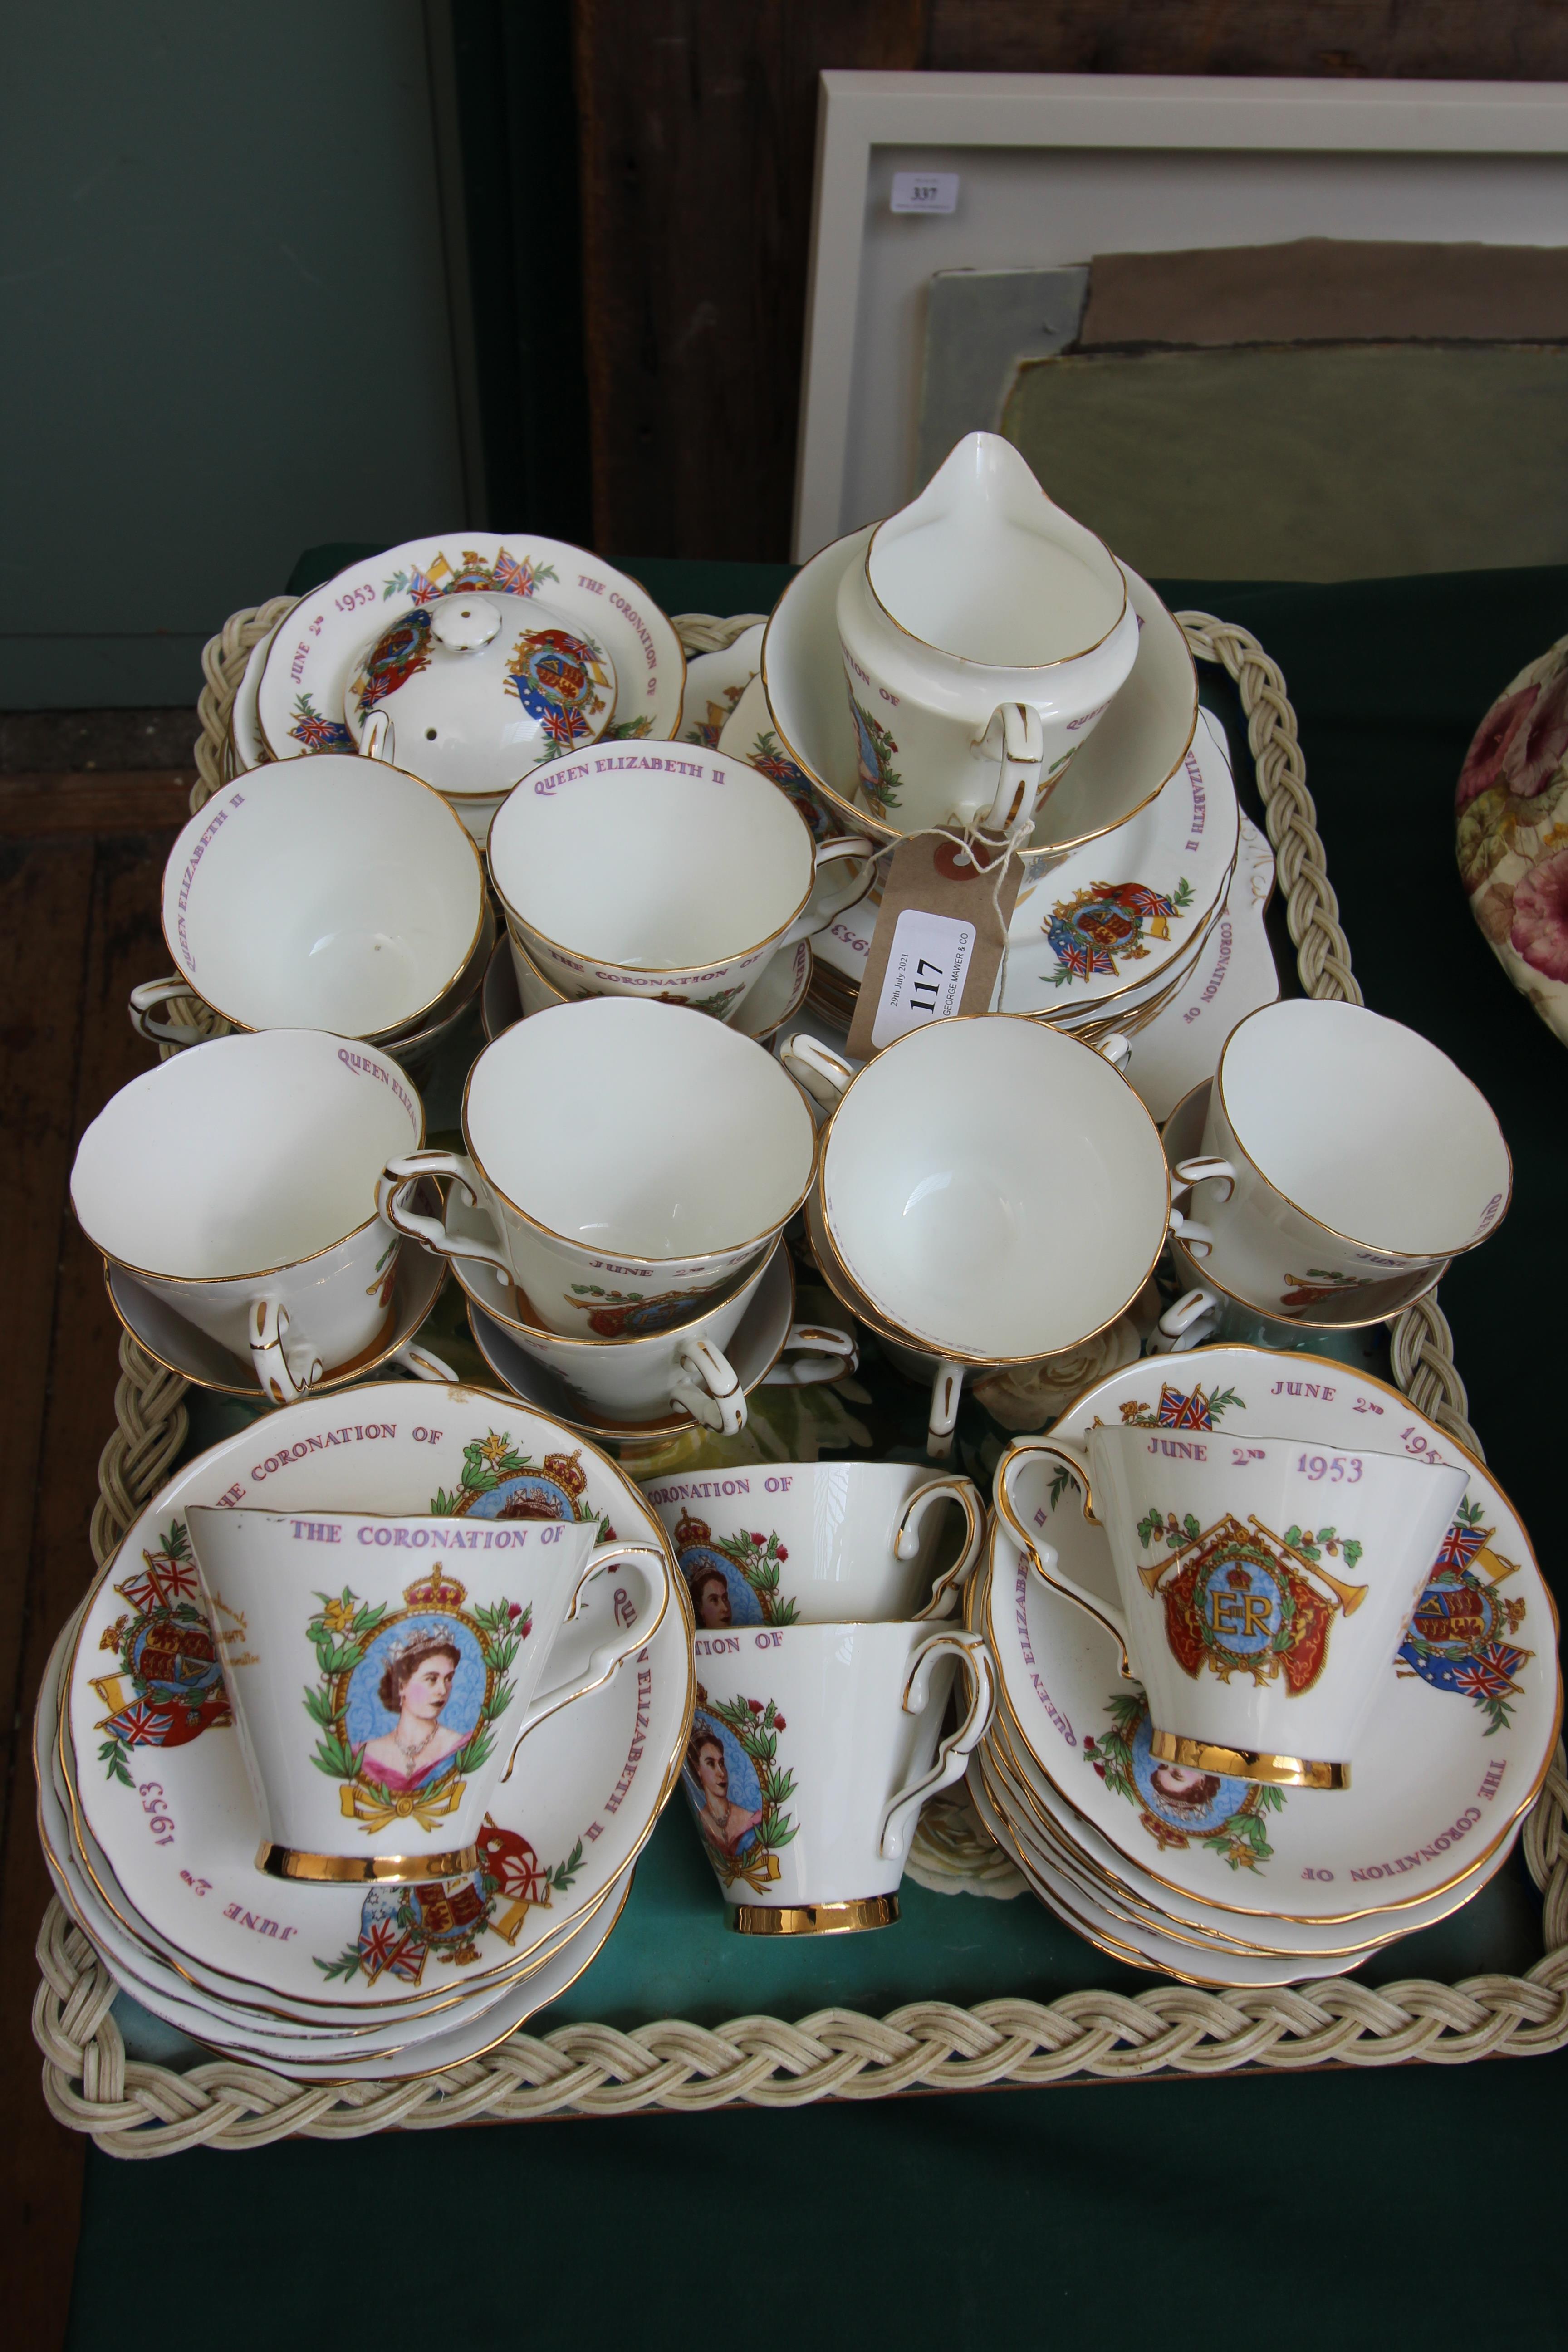 Gladstone bone china tea service celebrating the Coronation of Queen Elizabeth II (approx 58